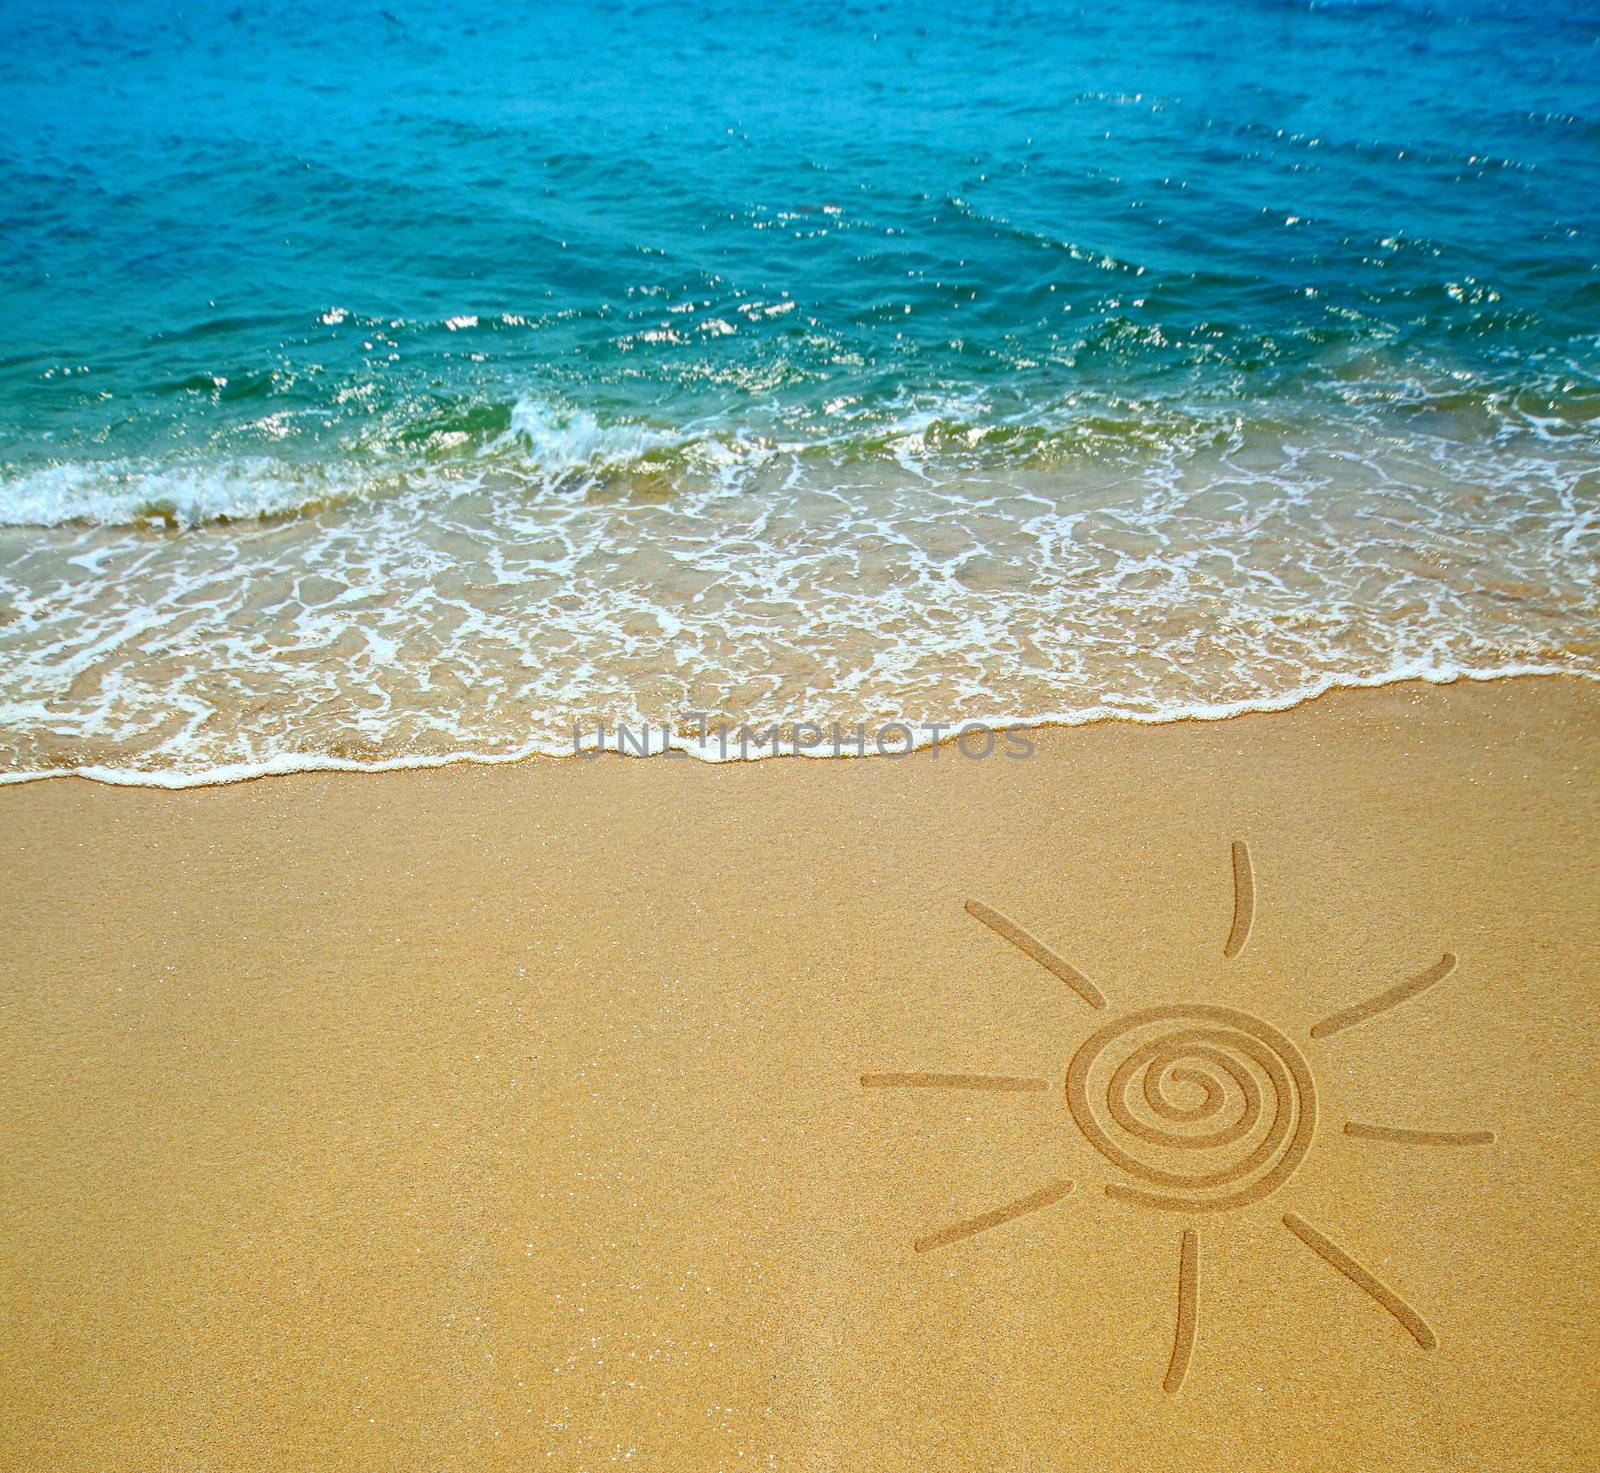 sun drawing on a beach by rudchenko